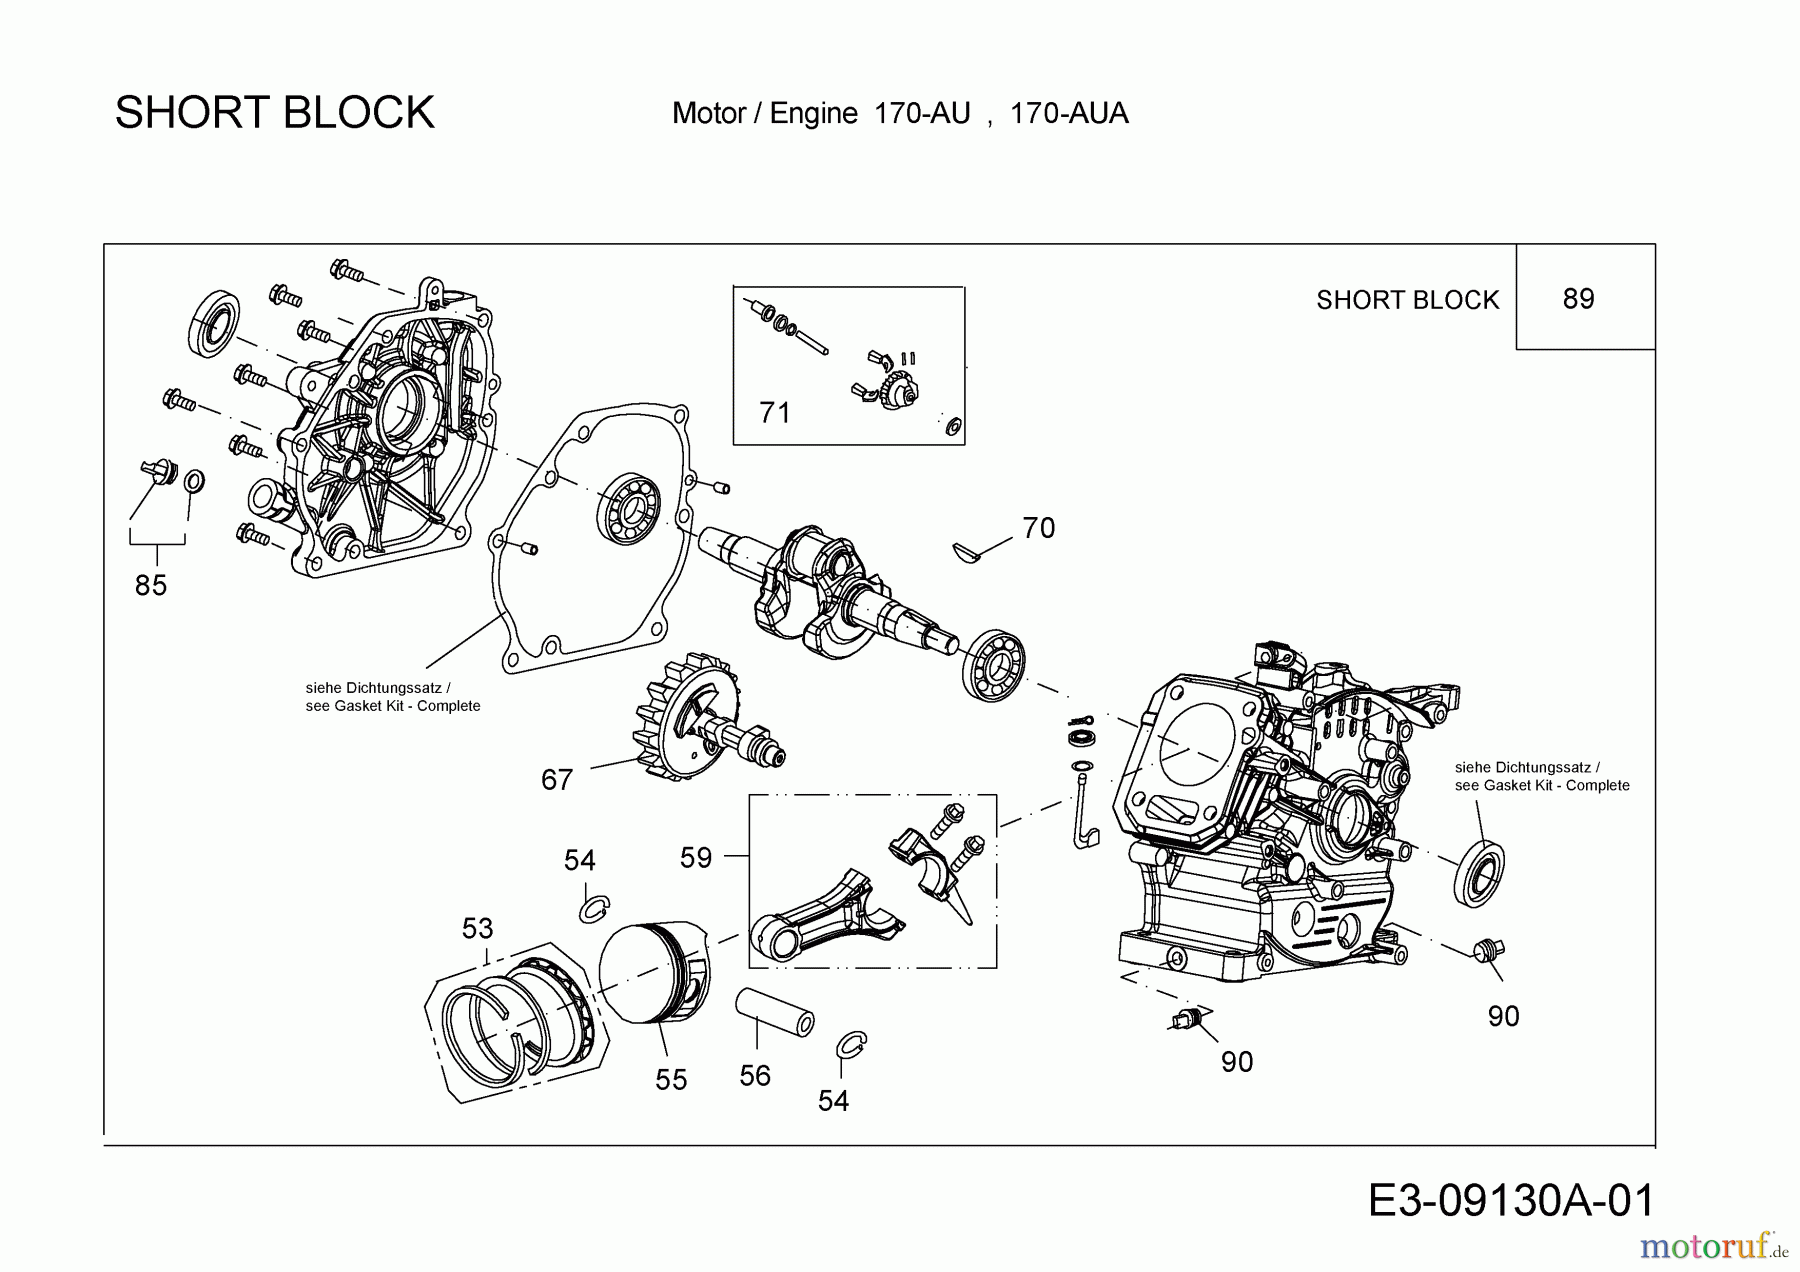  MTD-Engines Horizontal 170-AUA 752Z170-AUA  (2015) Short block